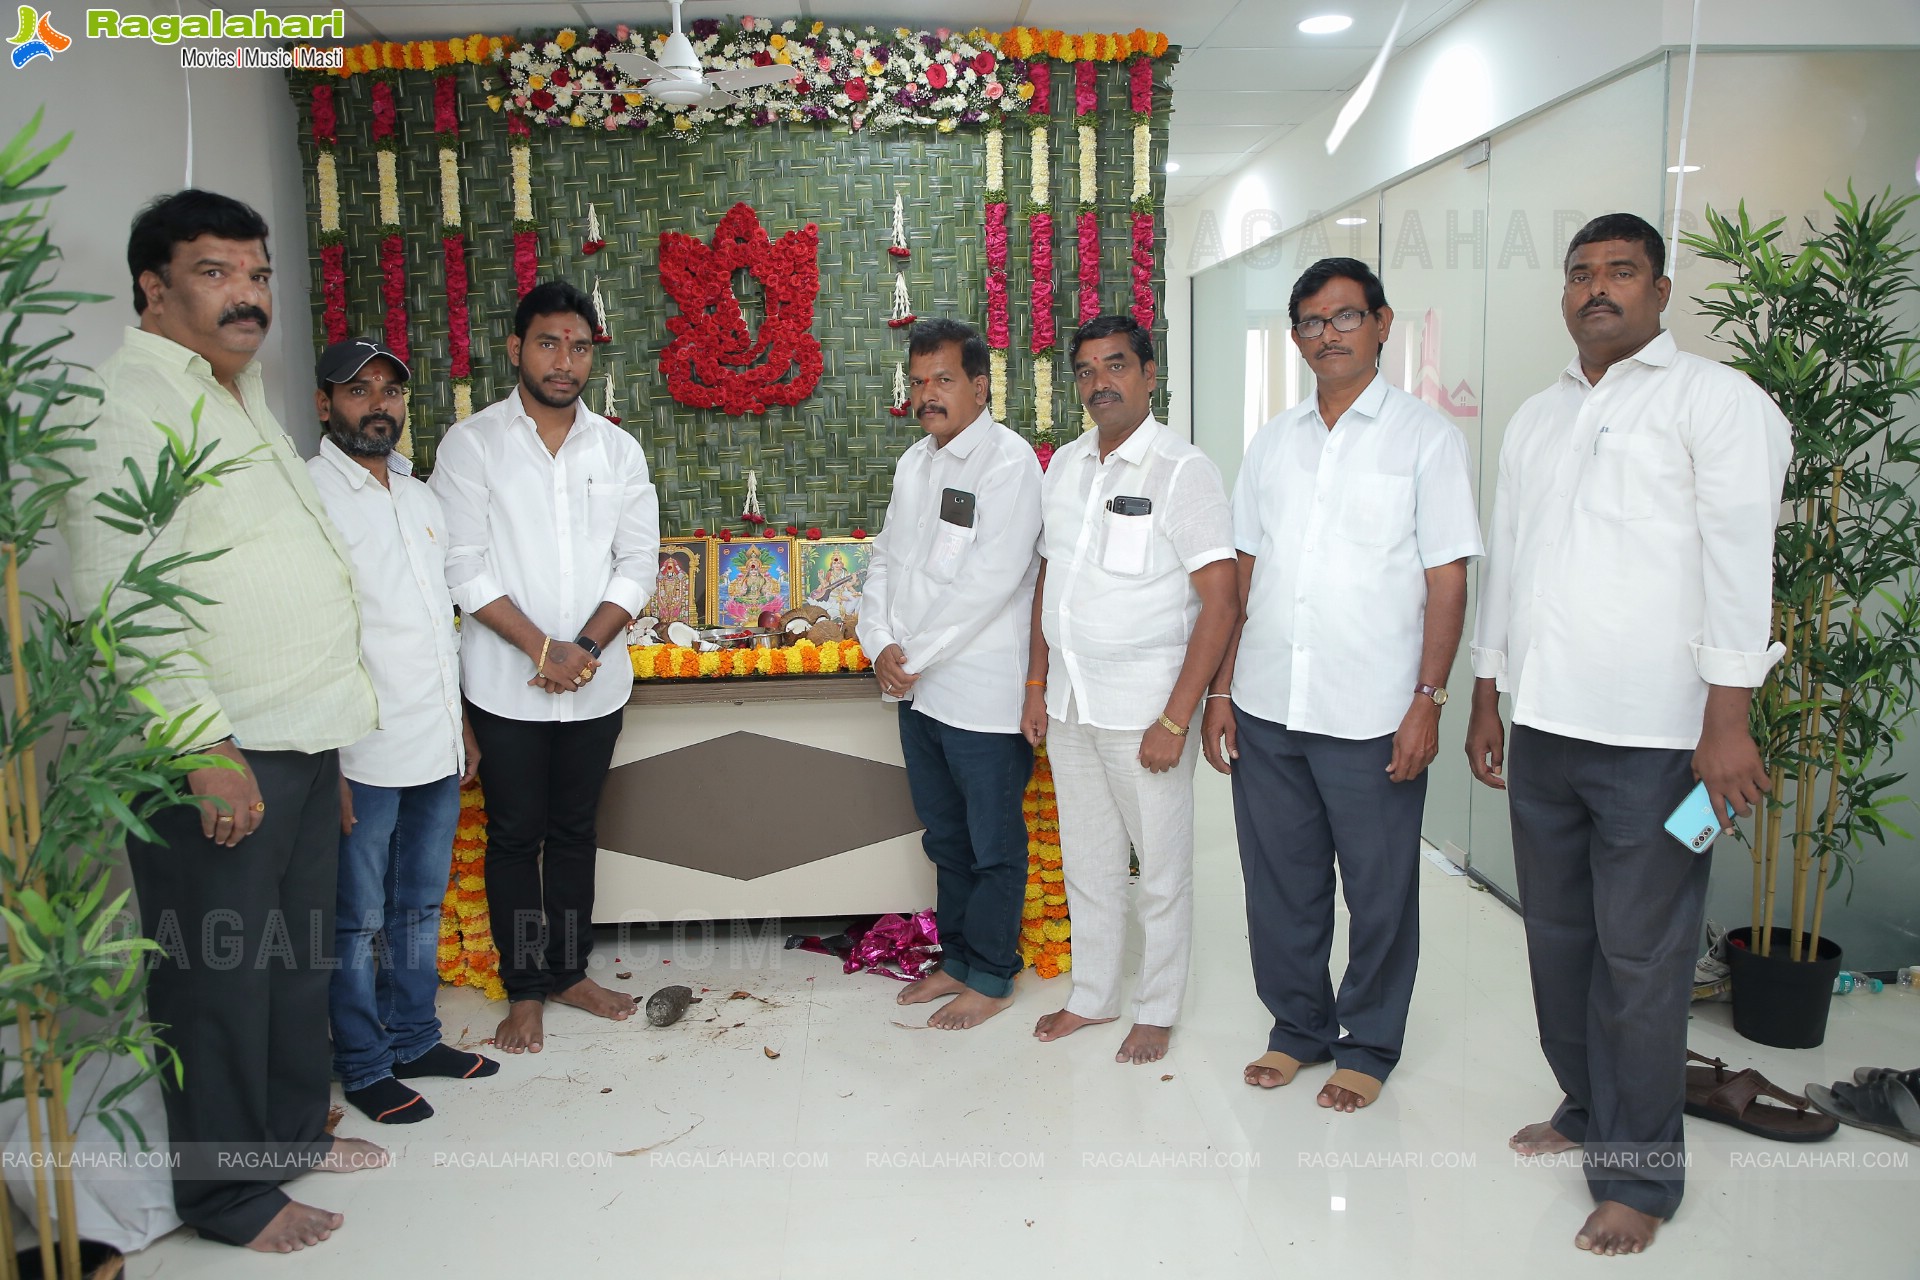 Sriram Builders and Developers Opens its New Office at SR Nagar